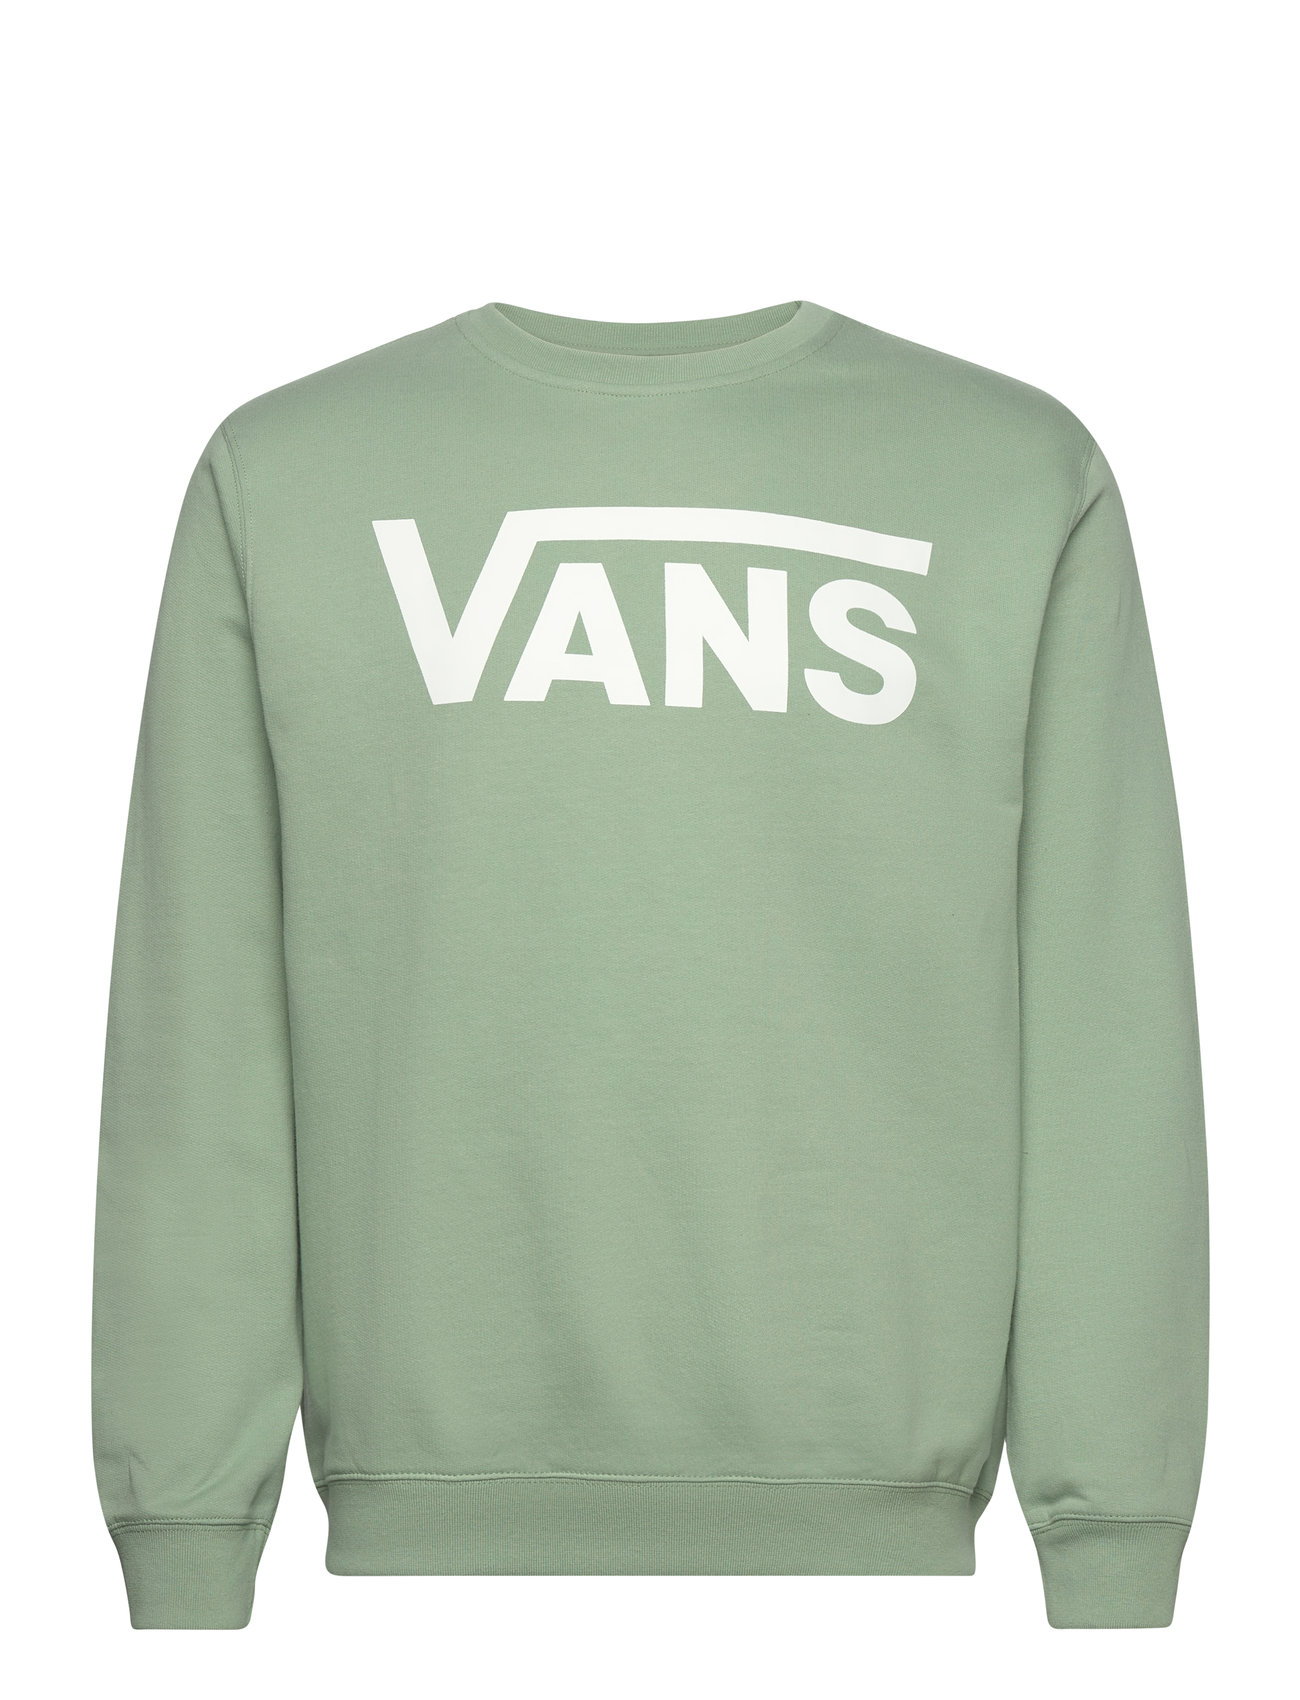 Mn Vans Classic Crew Ii Sport Sweat-shirts & Hoodies Sweat-shirts Green VANS